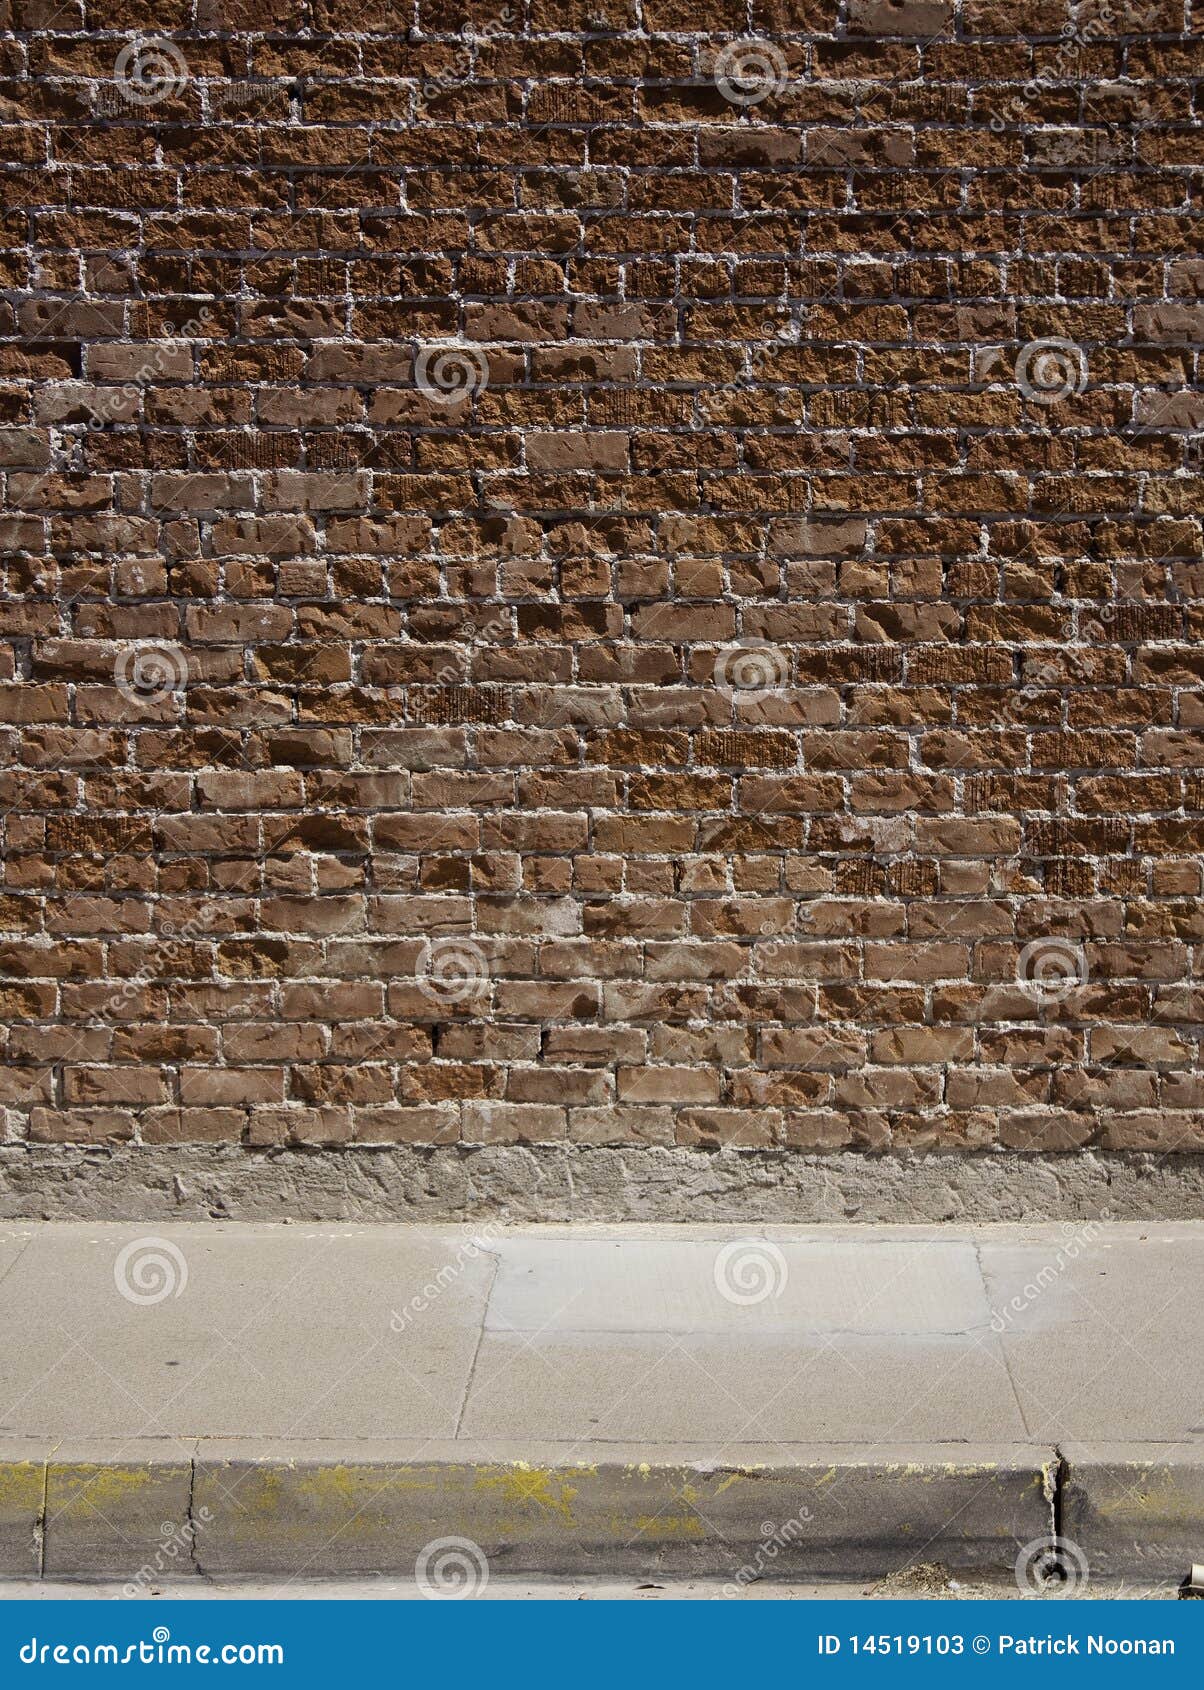 brick wall and sidewalk